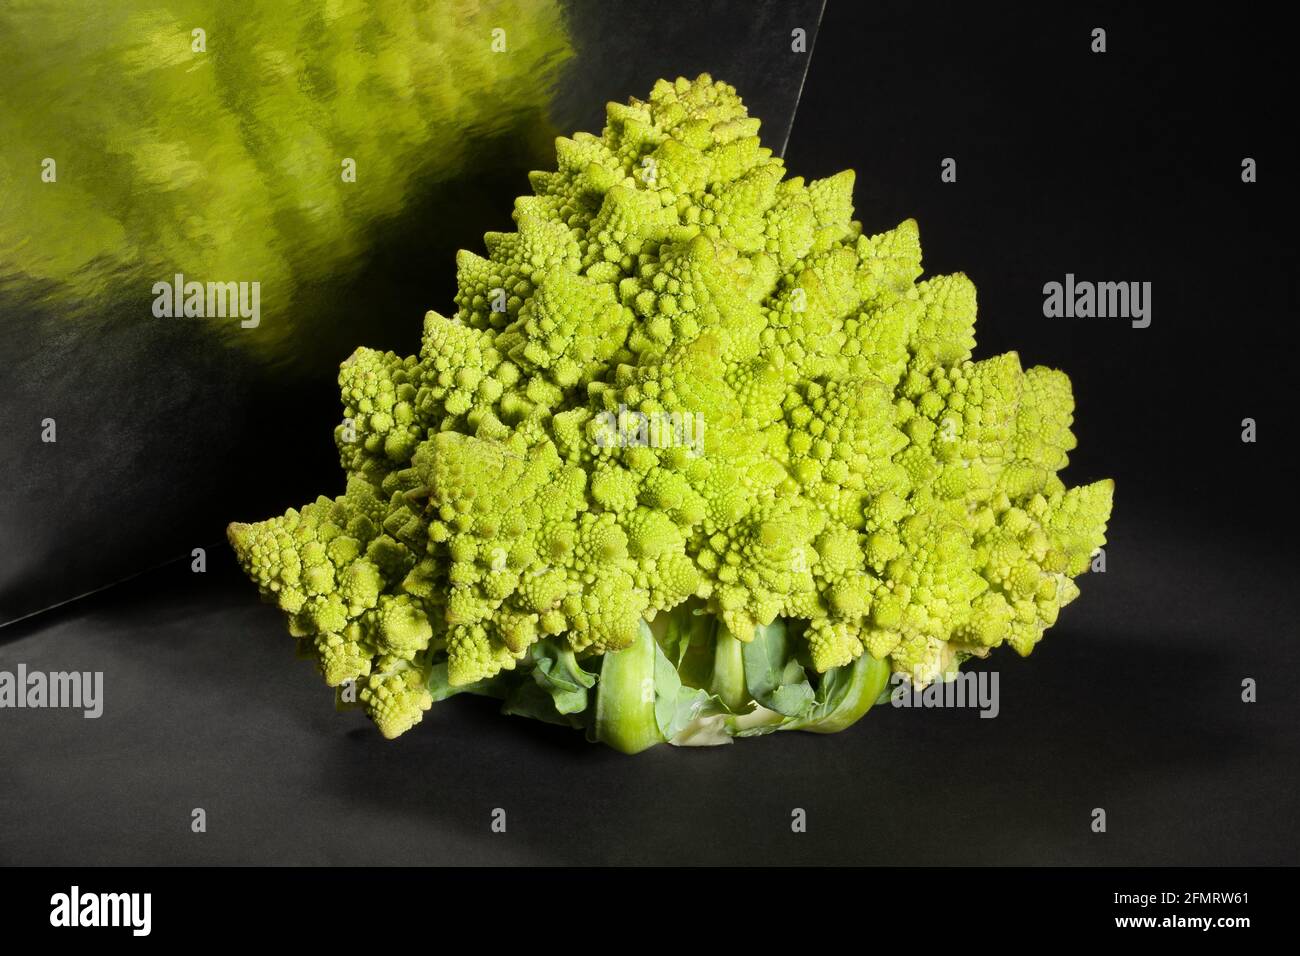 mirrored romanesco broccoli on black background Stock Photo